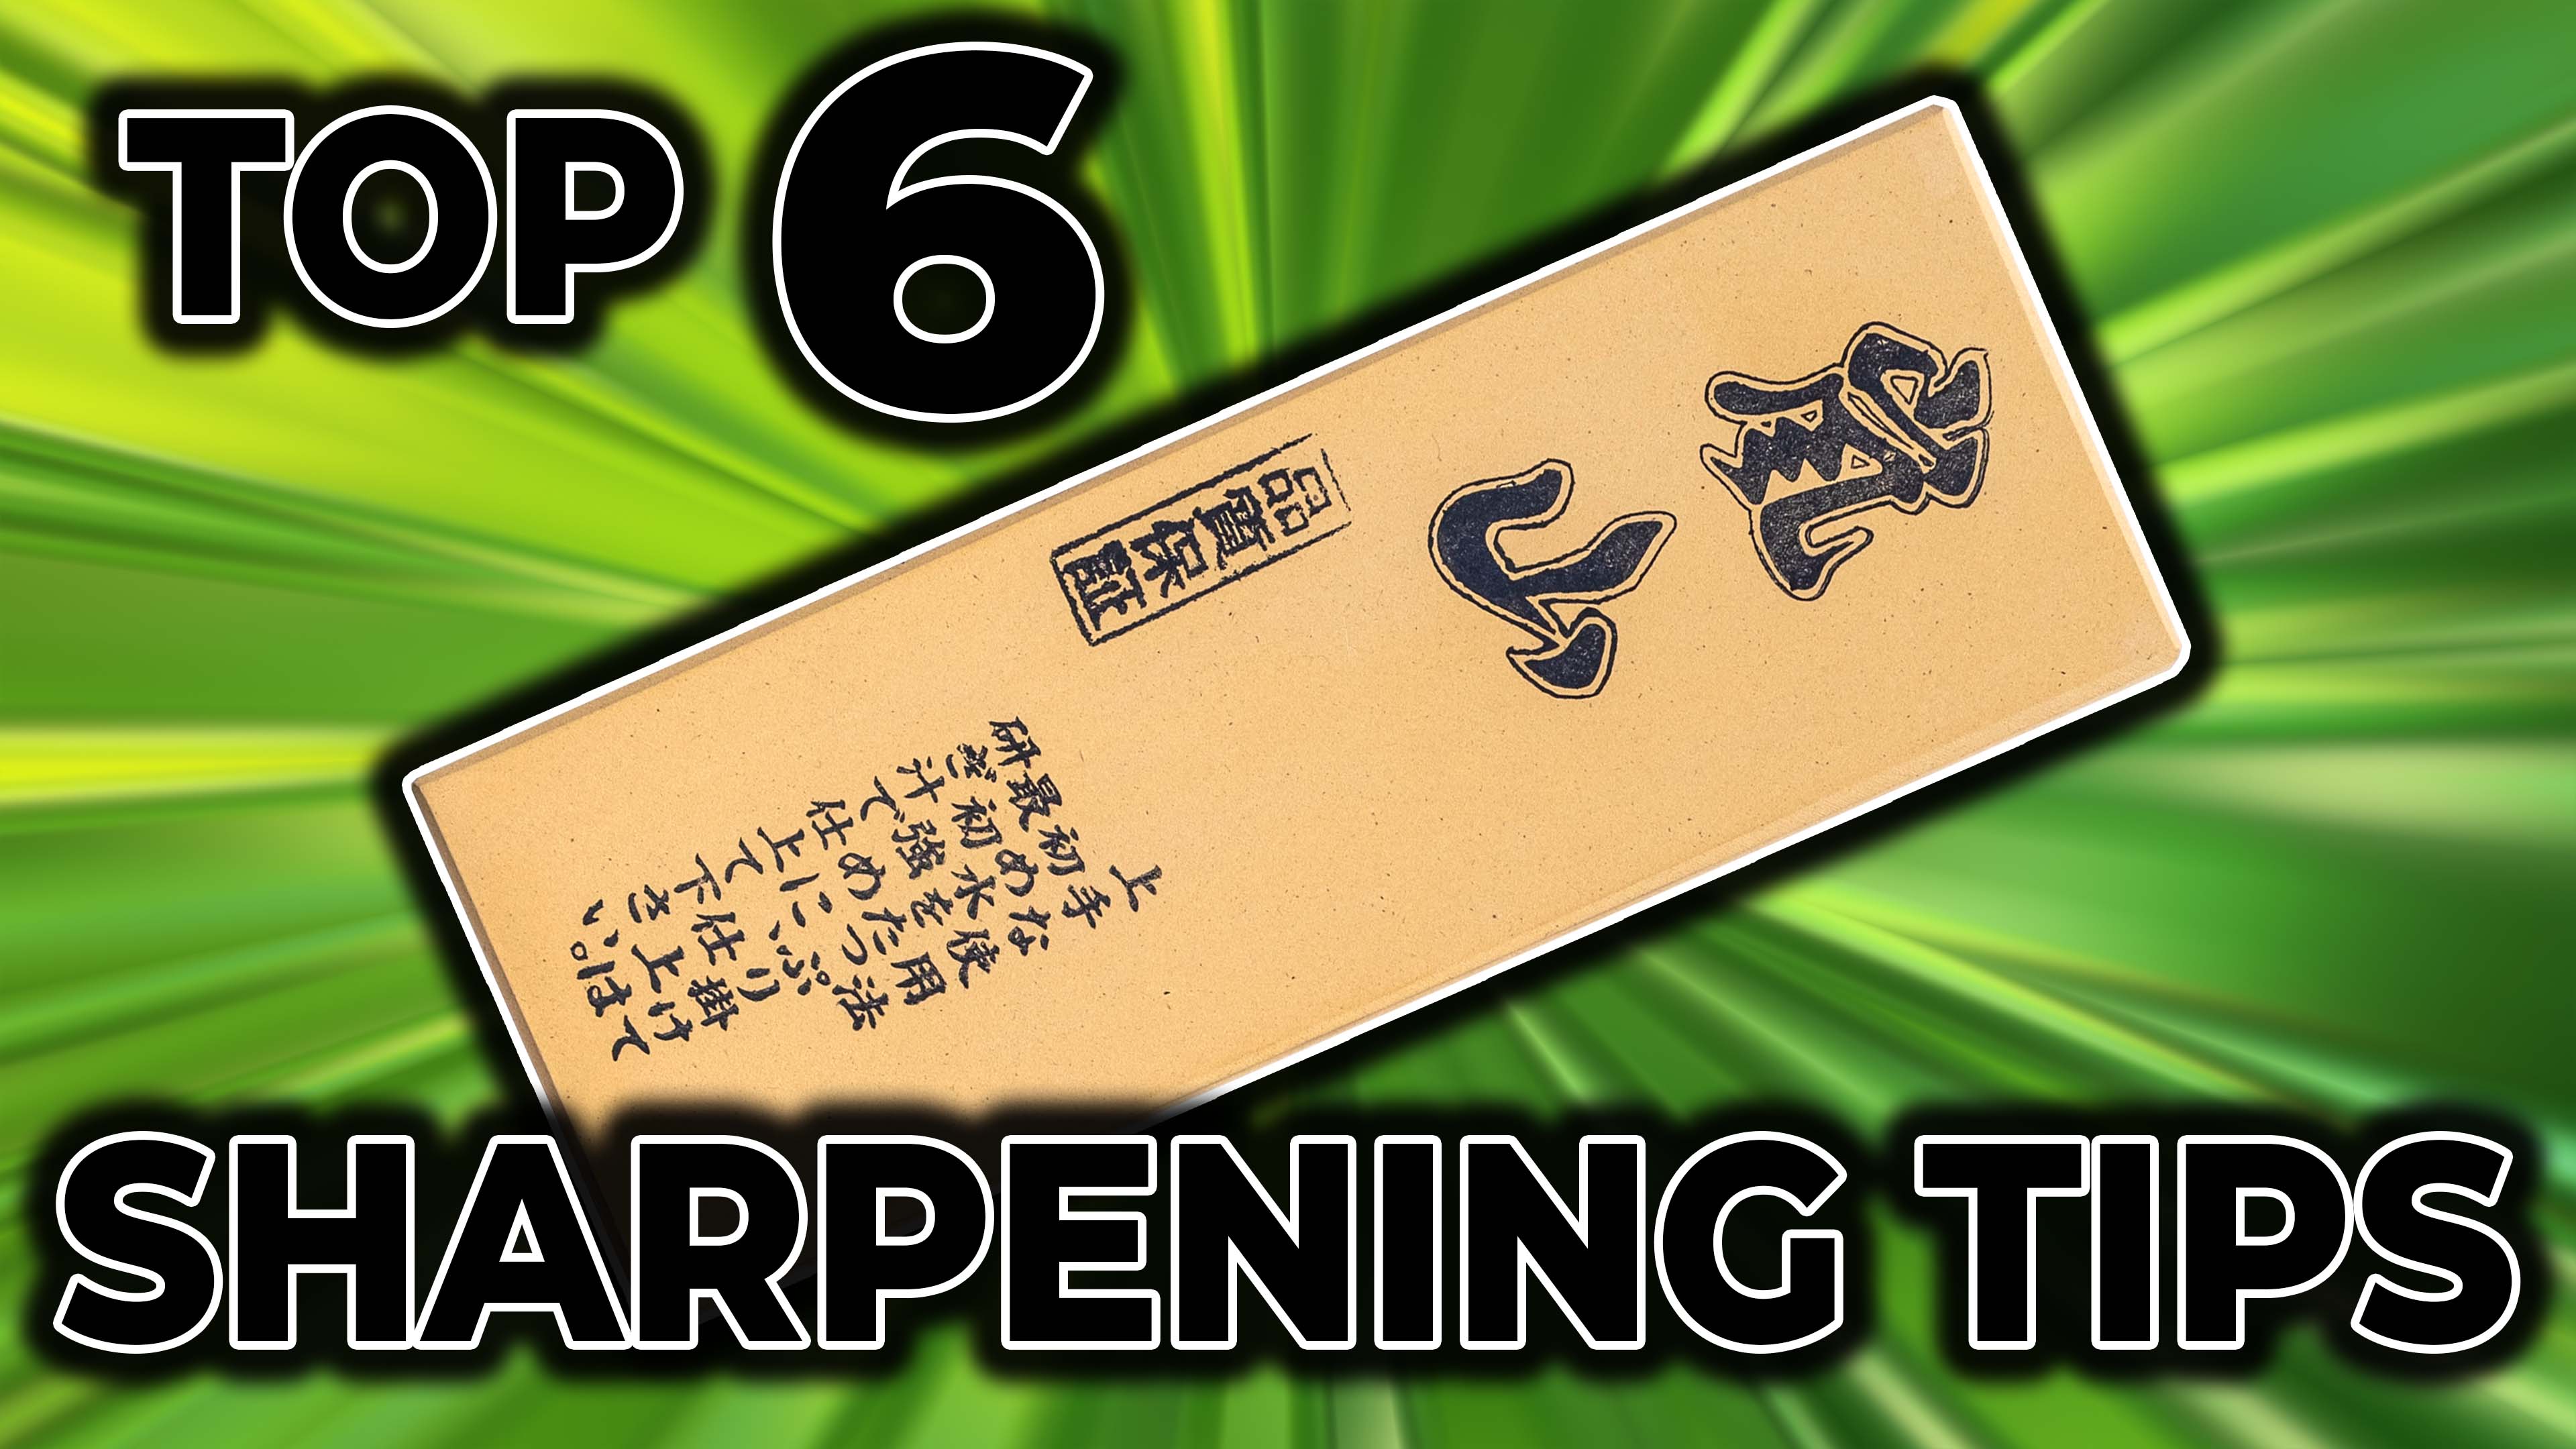 Top 6 Sharpening Tips